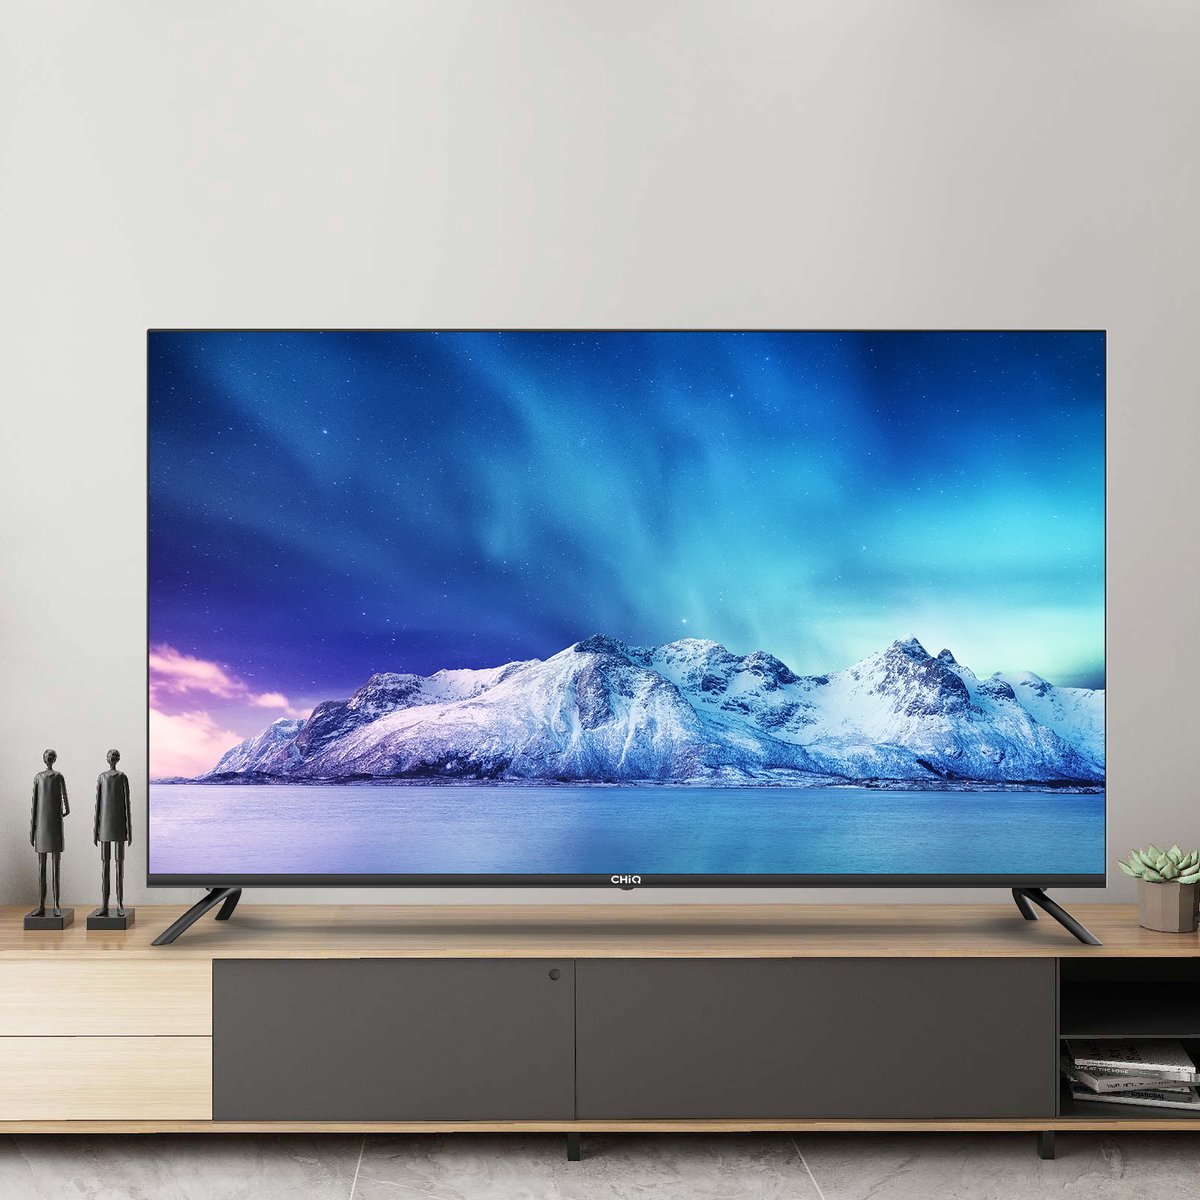 CHIQ U65G7LX - TV LED 4K 164 cm - Livraison Gratuite